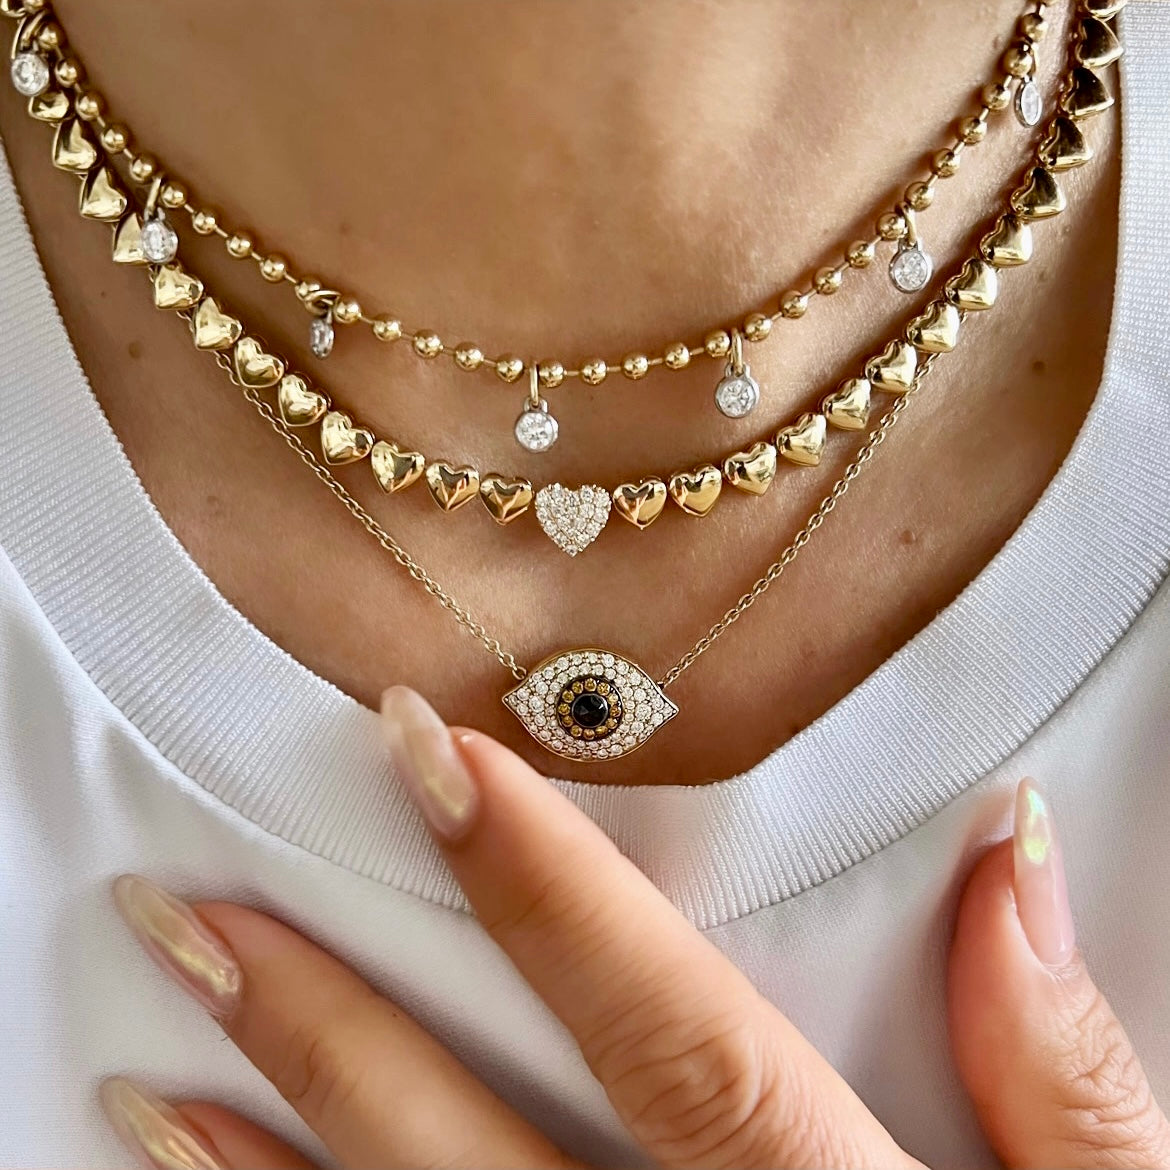 Dayri Jewelry design - louis vuitton necklaces • • • • • #jewelry #fashion # jewellery #handmade #earrings #accessories #necklace #gold #handmadejewelry  #love #style #jewelrydesigner #silver #jewelryaddict #ring #bracelet  #jewel